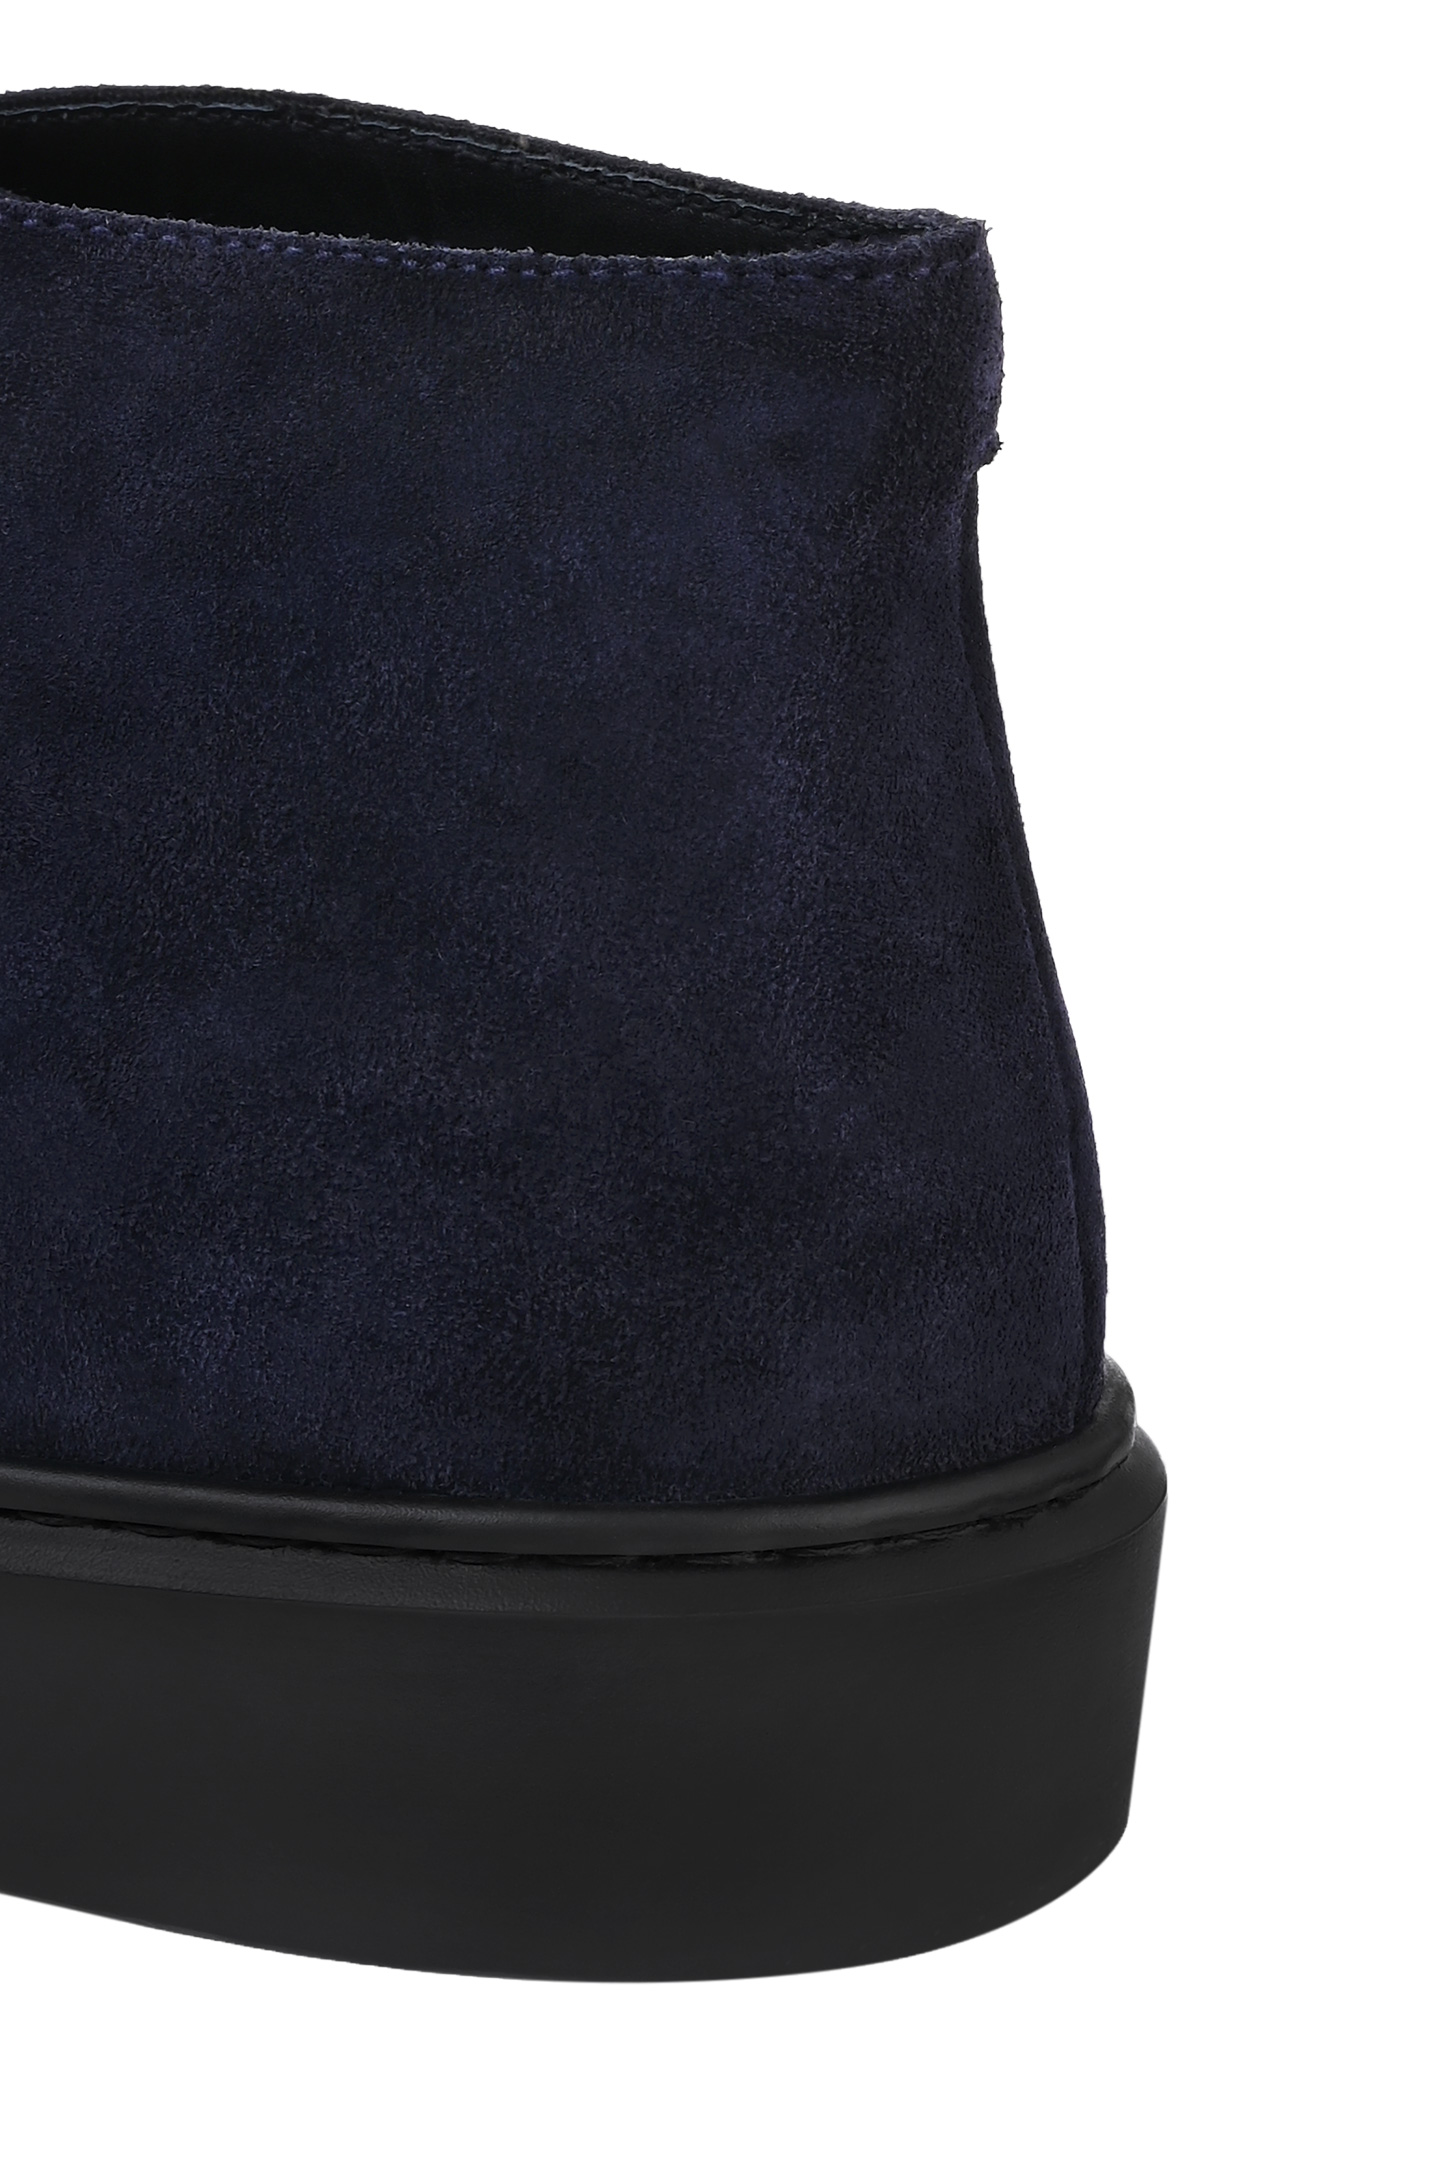 Ботинки DOUCAL'S DU3216ALEXUF009, цвет: Темно-синий, Мужской